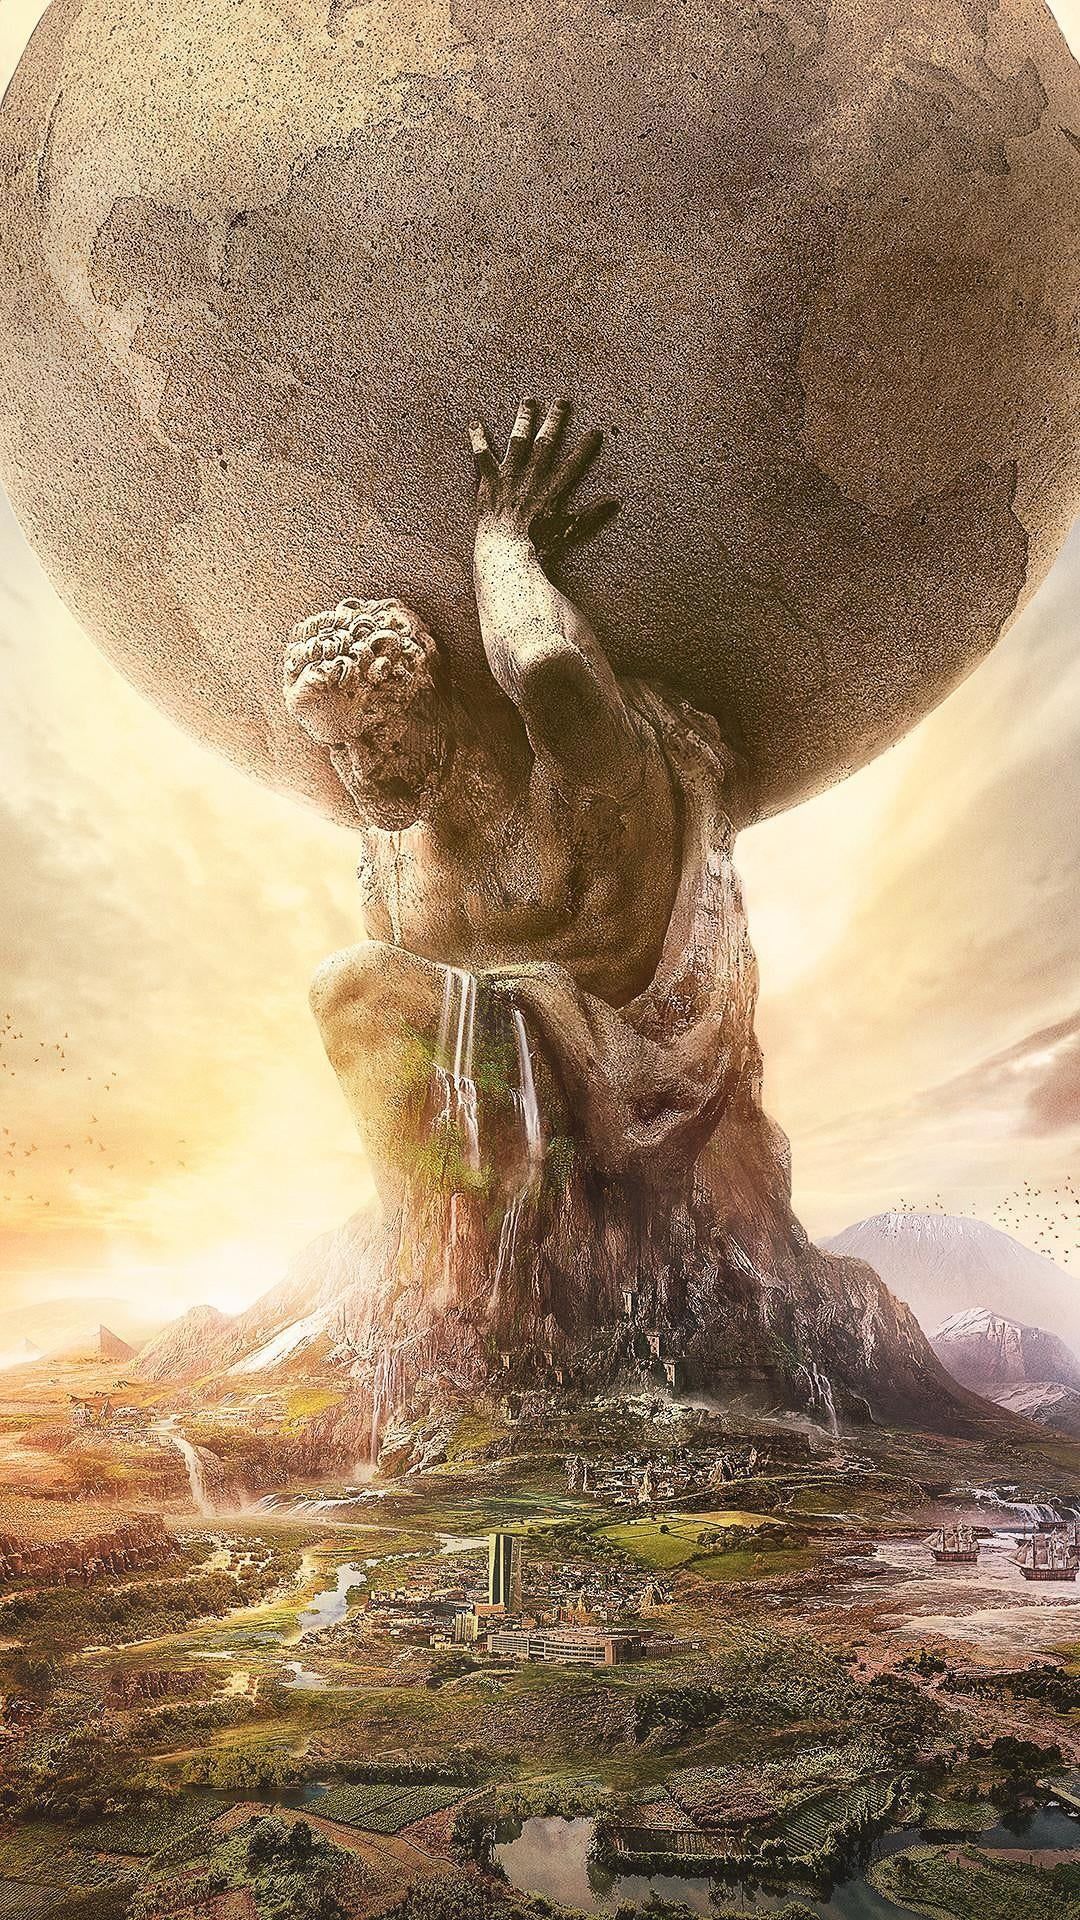 A giant statue holding up the world - Greek mythology, Atlas